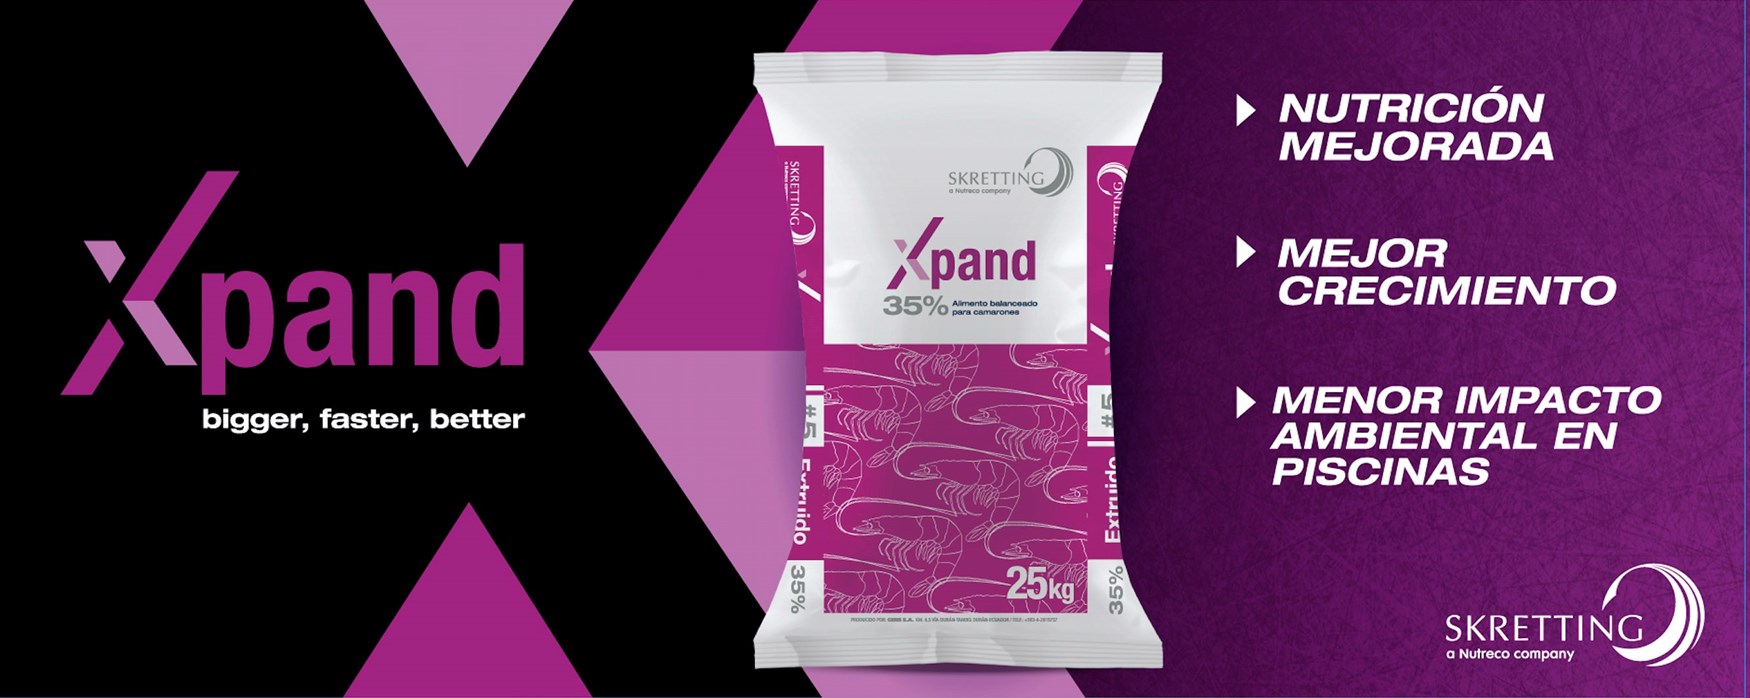 Xpand product mockup from Ecuador